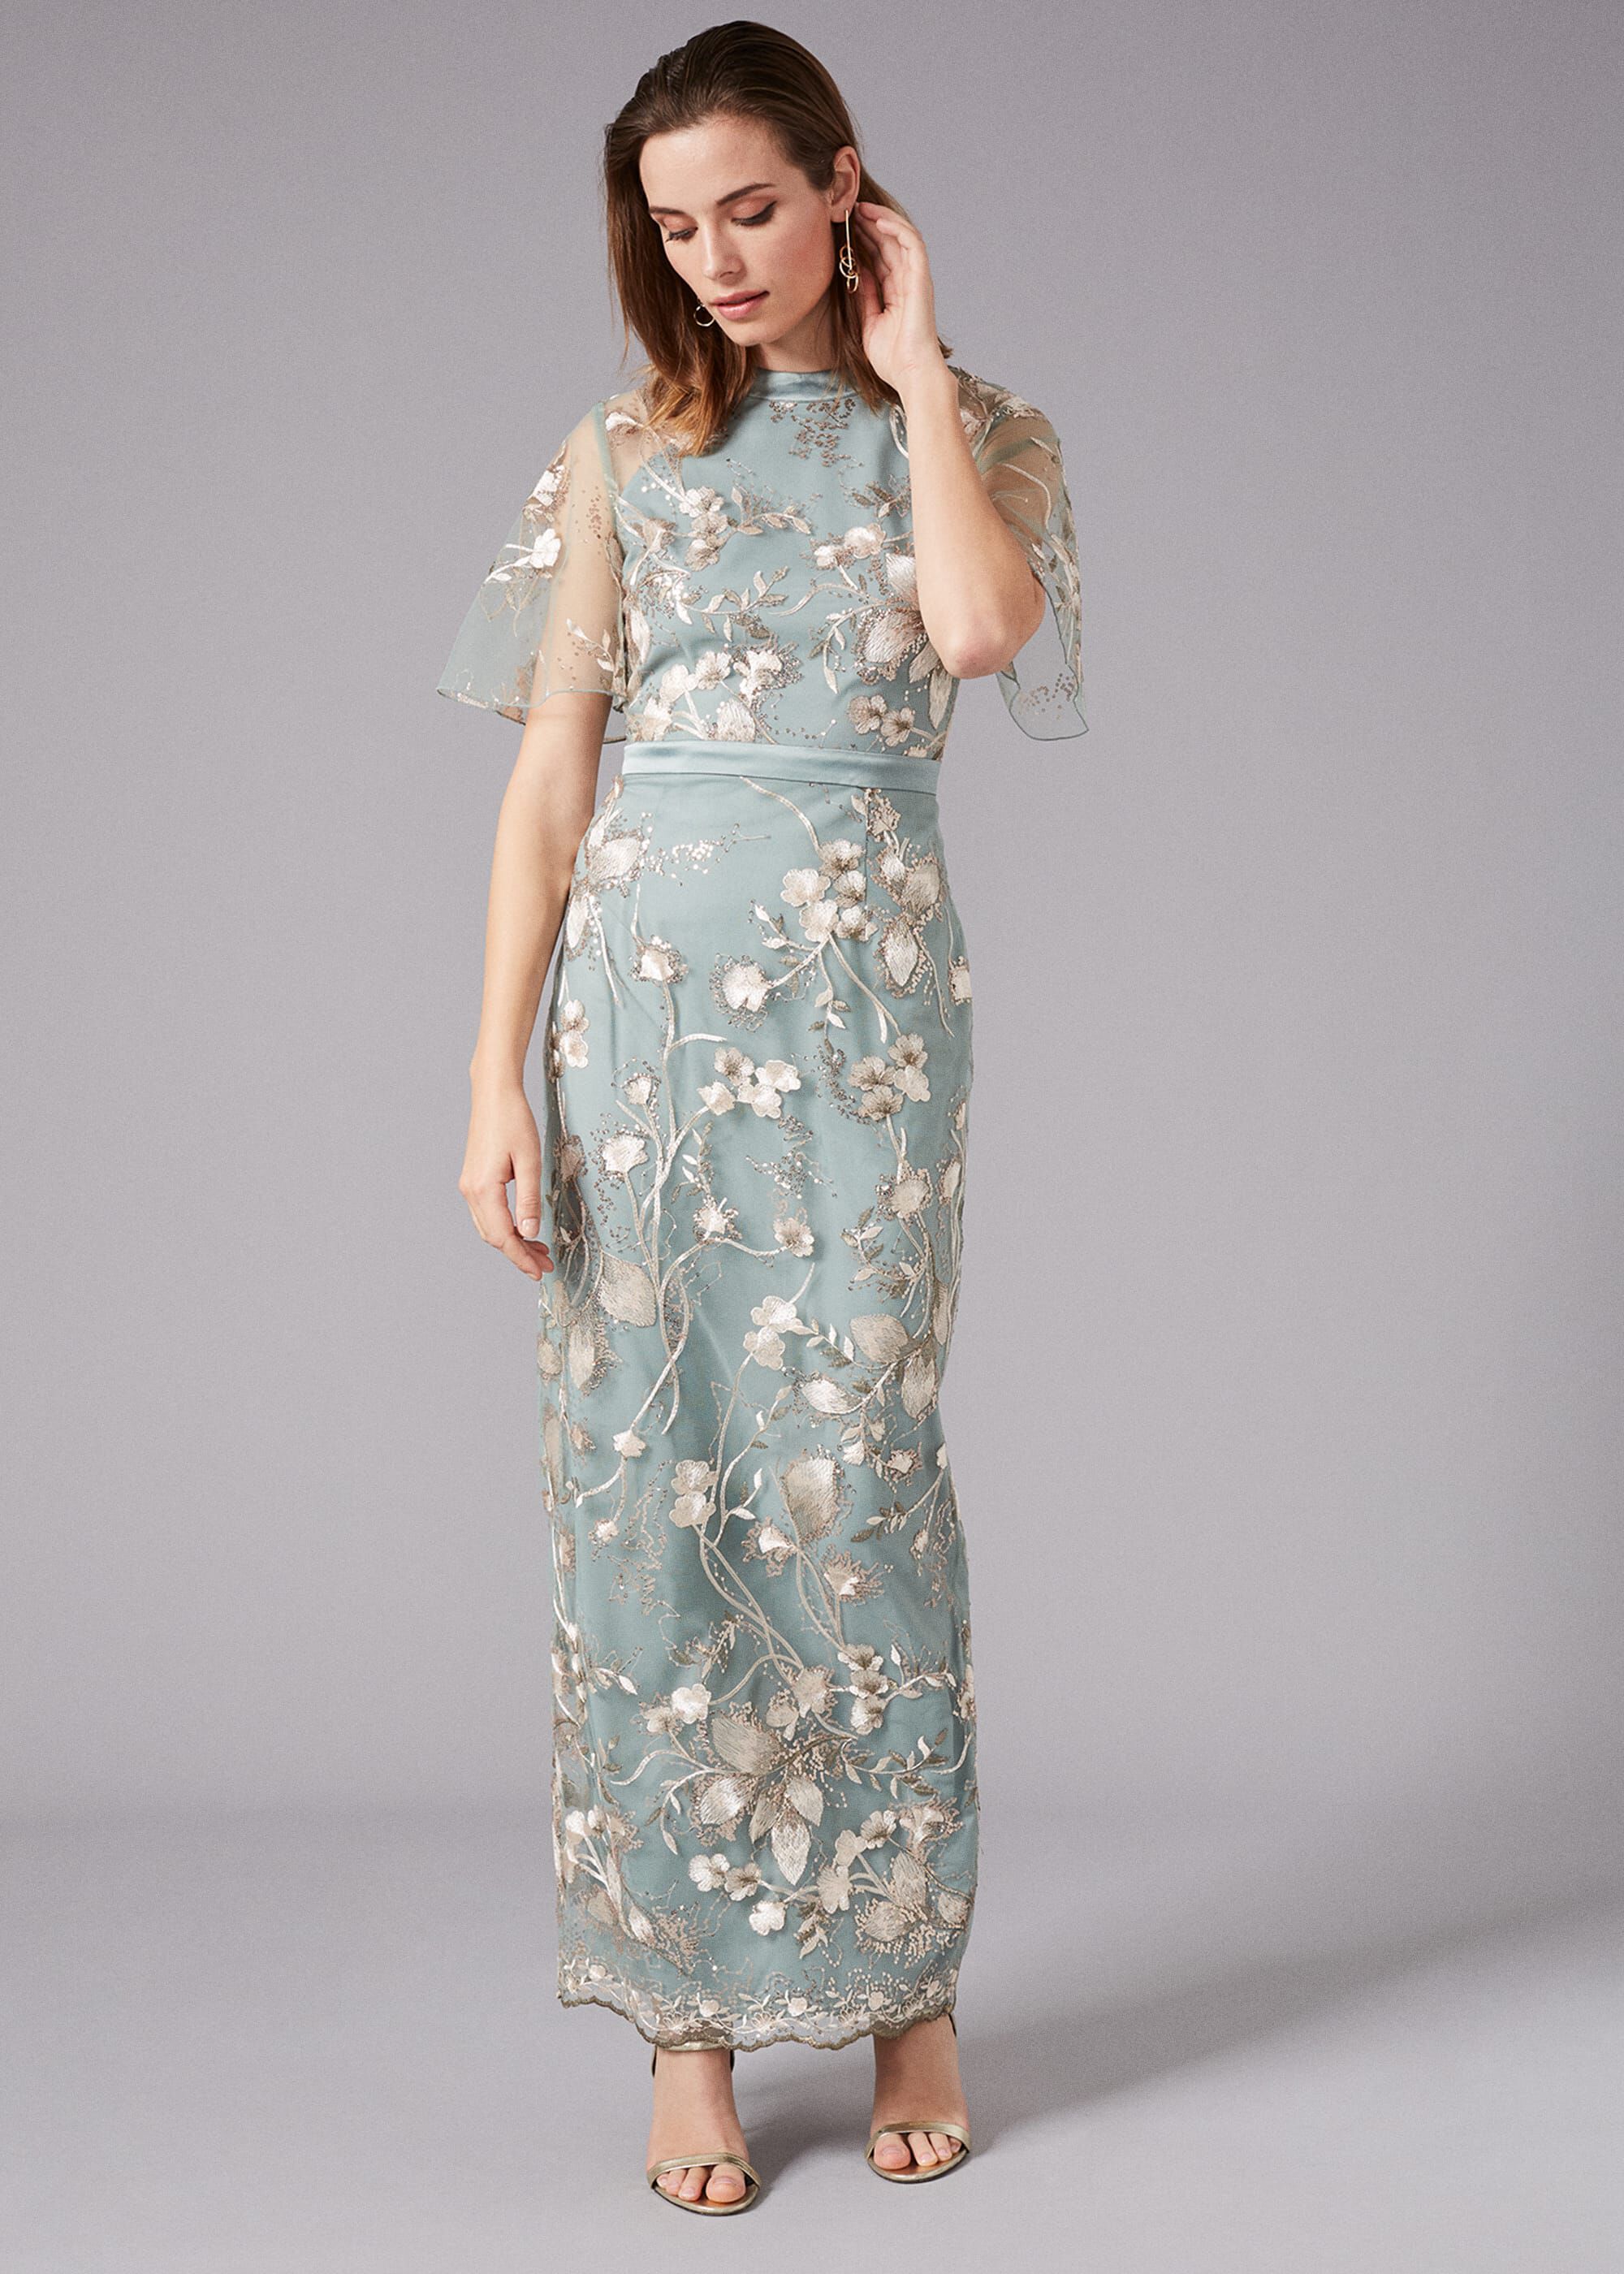 Glenda Floral Embroidered Maxi Dress ...